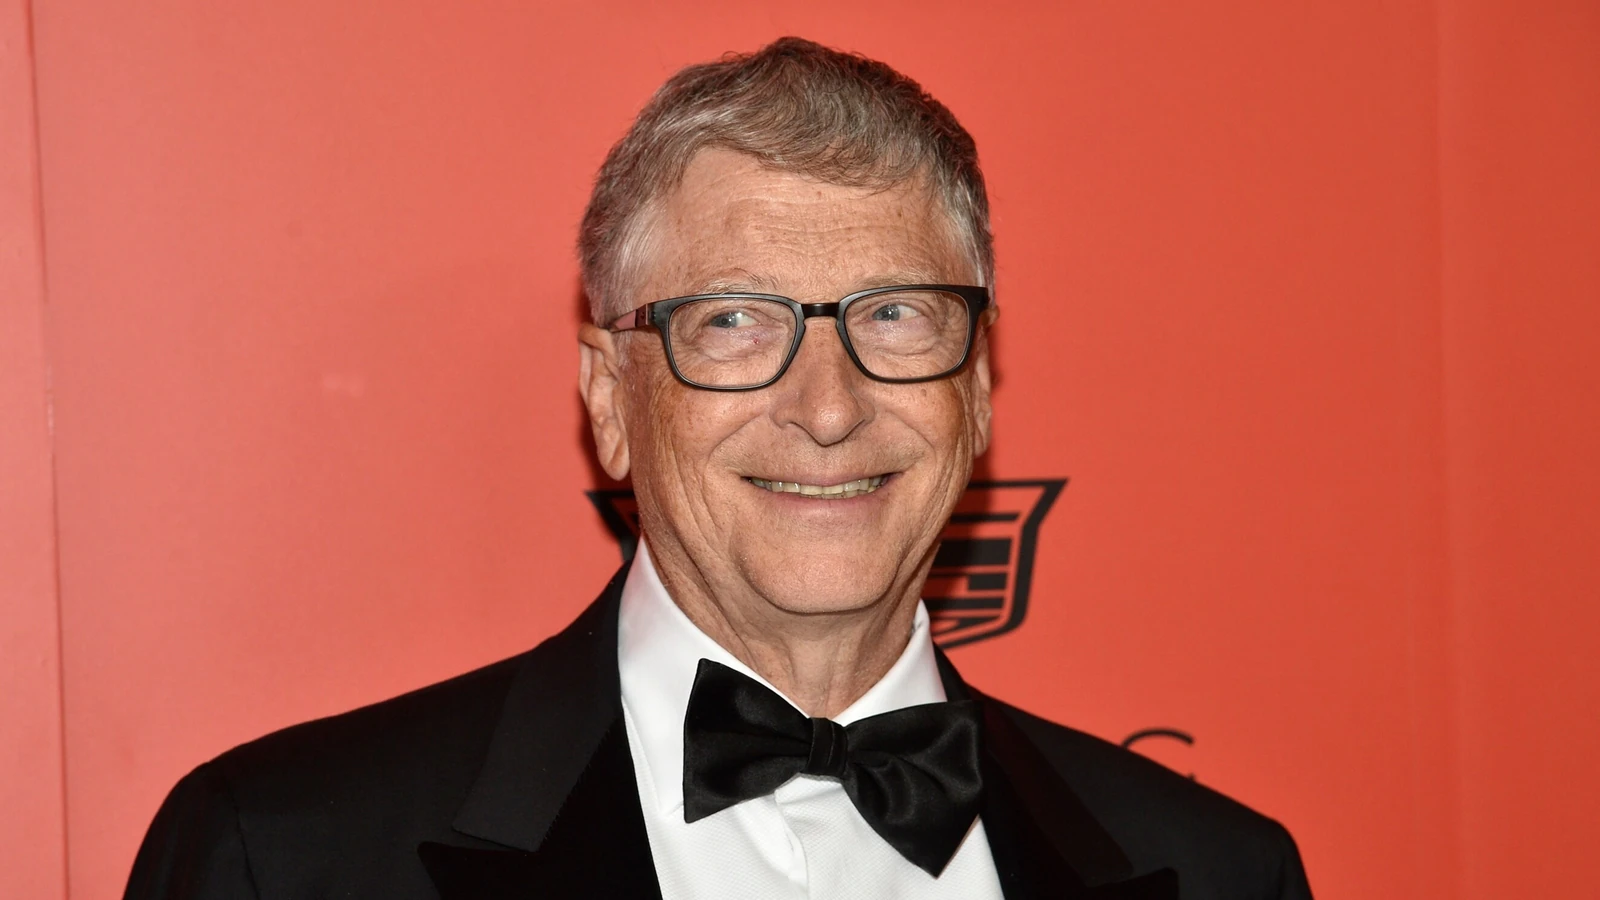 Bill Gates donates $6 bn to Gates Foundation, days after pledging $20 bn